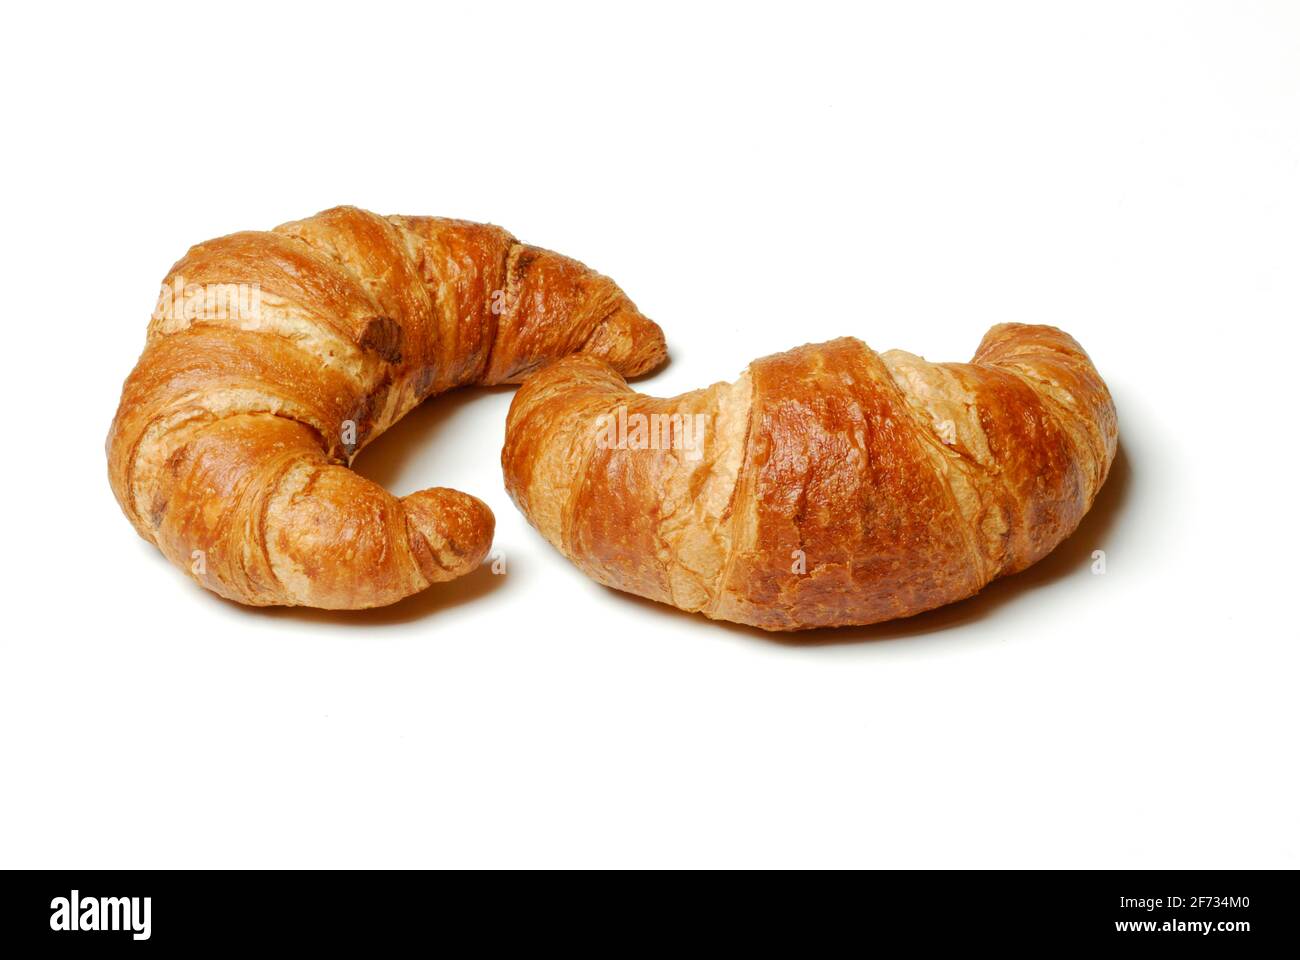 Croissants, croissant, bakery products, breakfast Stock Photo